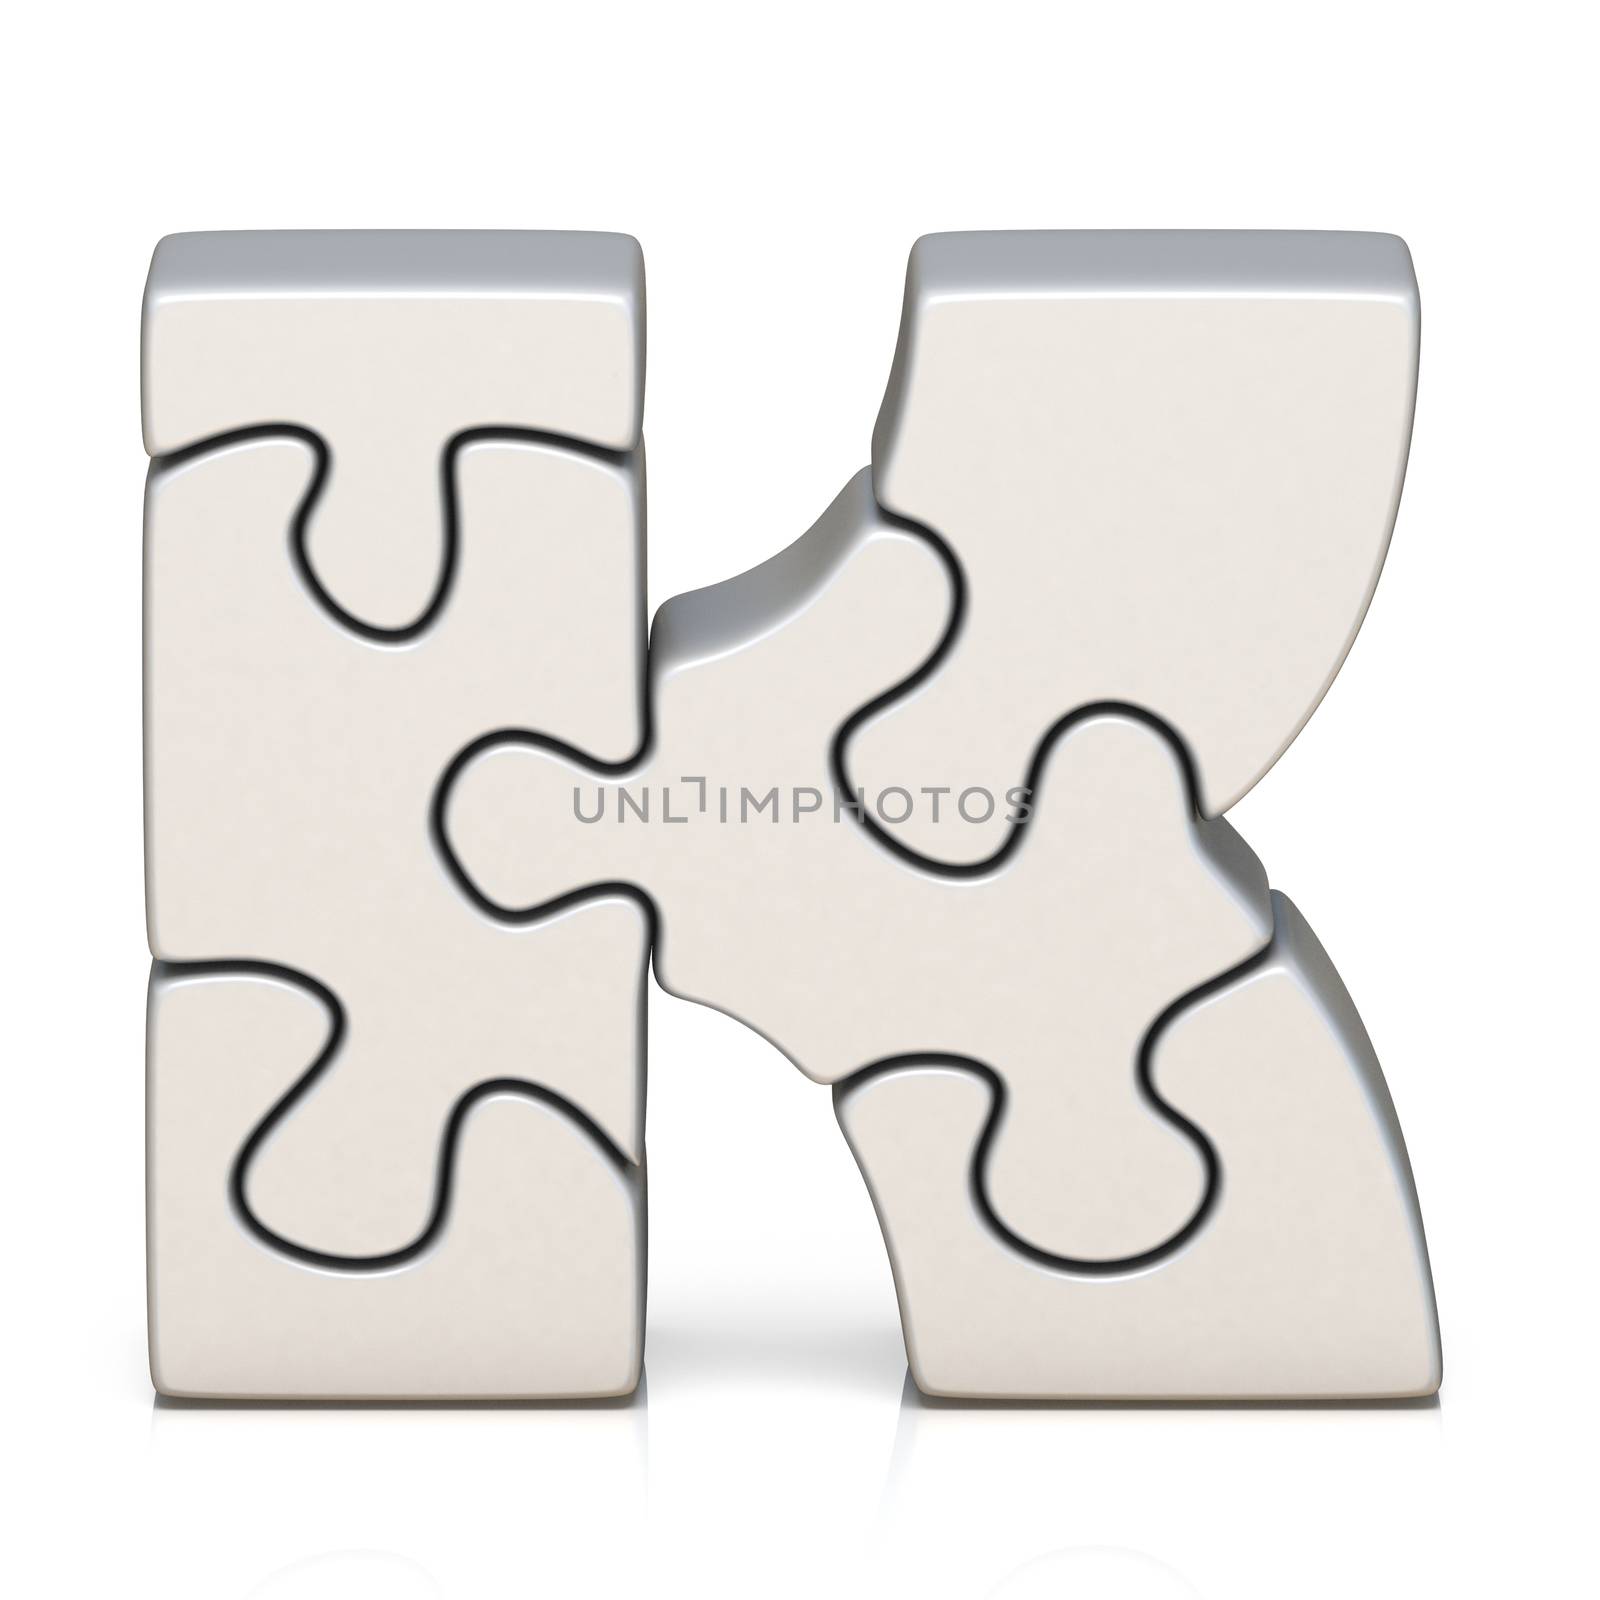 White puzzle jigsaw letter K 3D render illustration isolated on white background